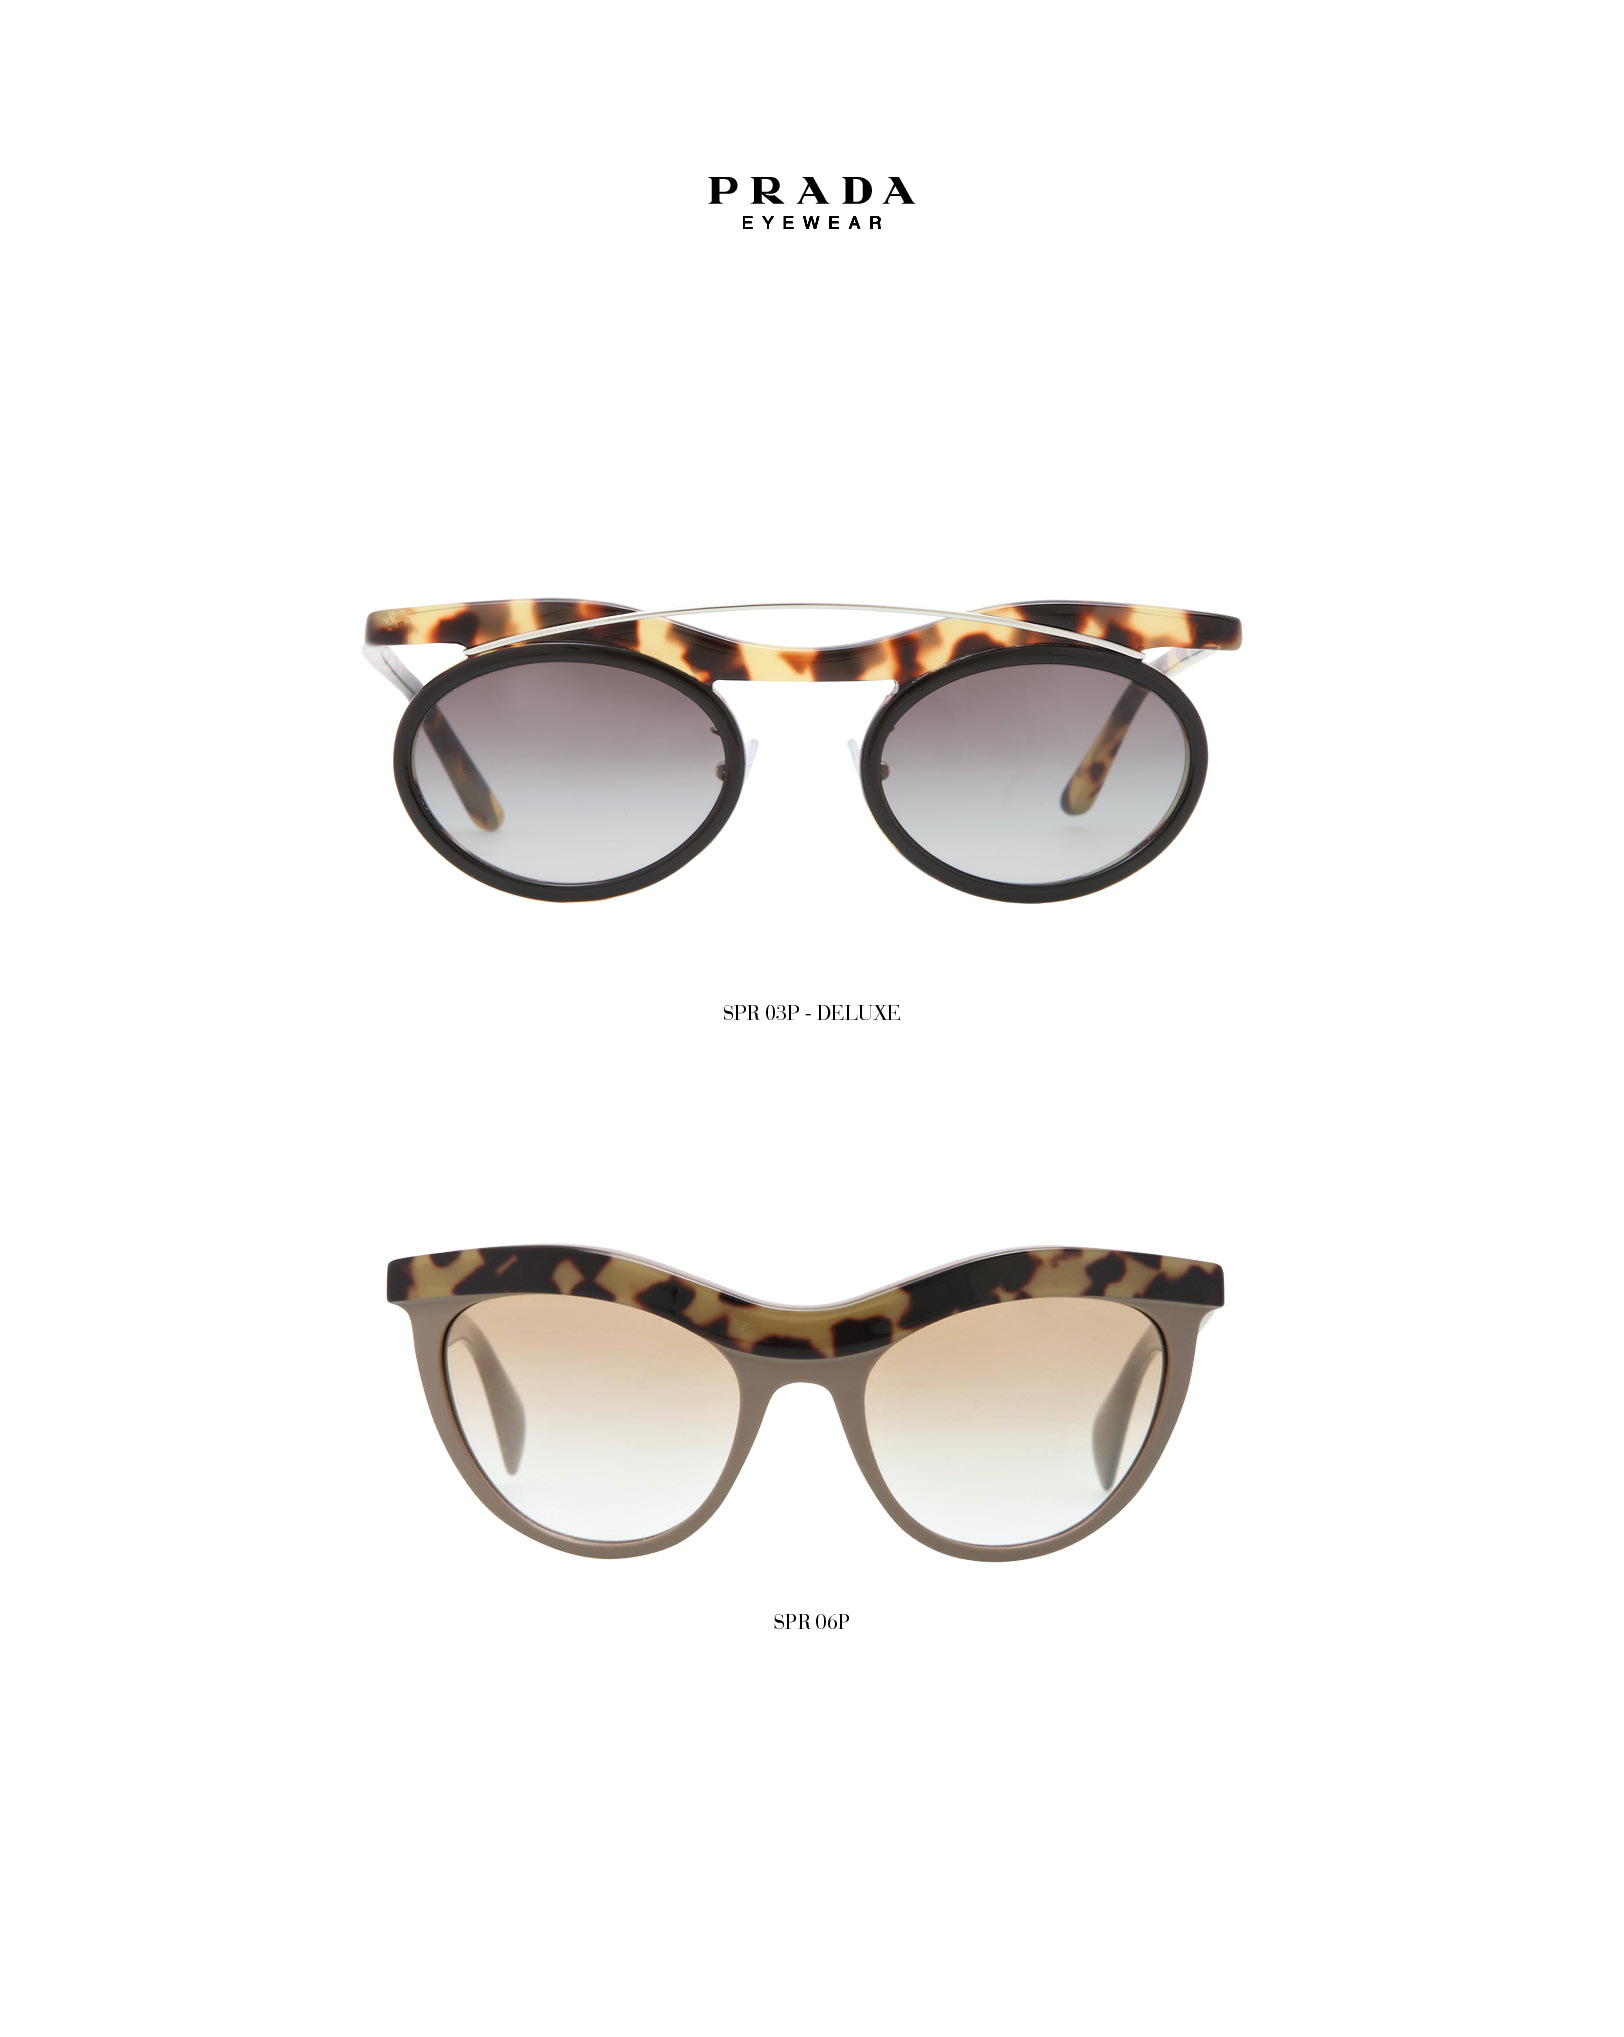 Prada_Women_Portrait_Sunglasses[1]